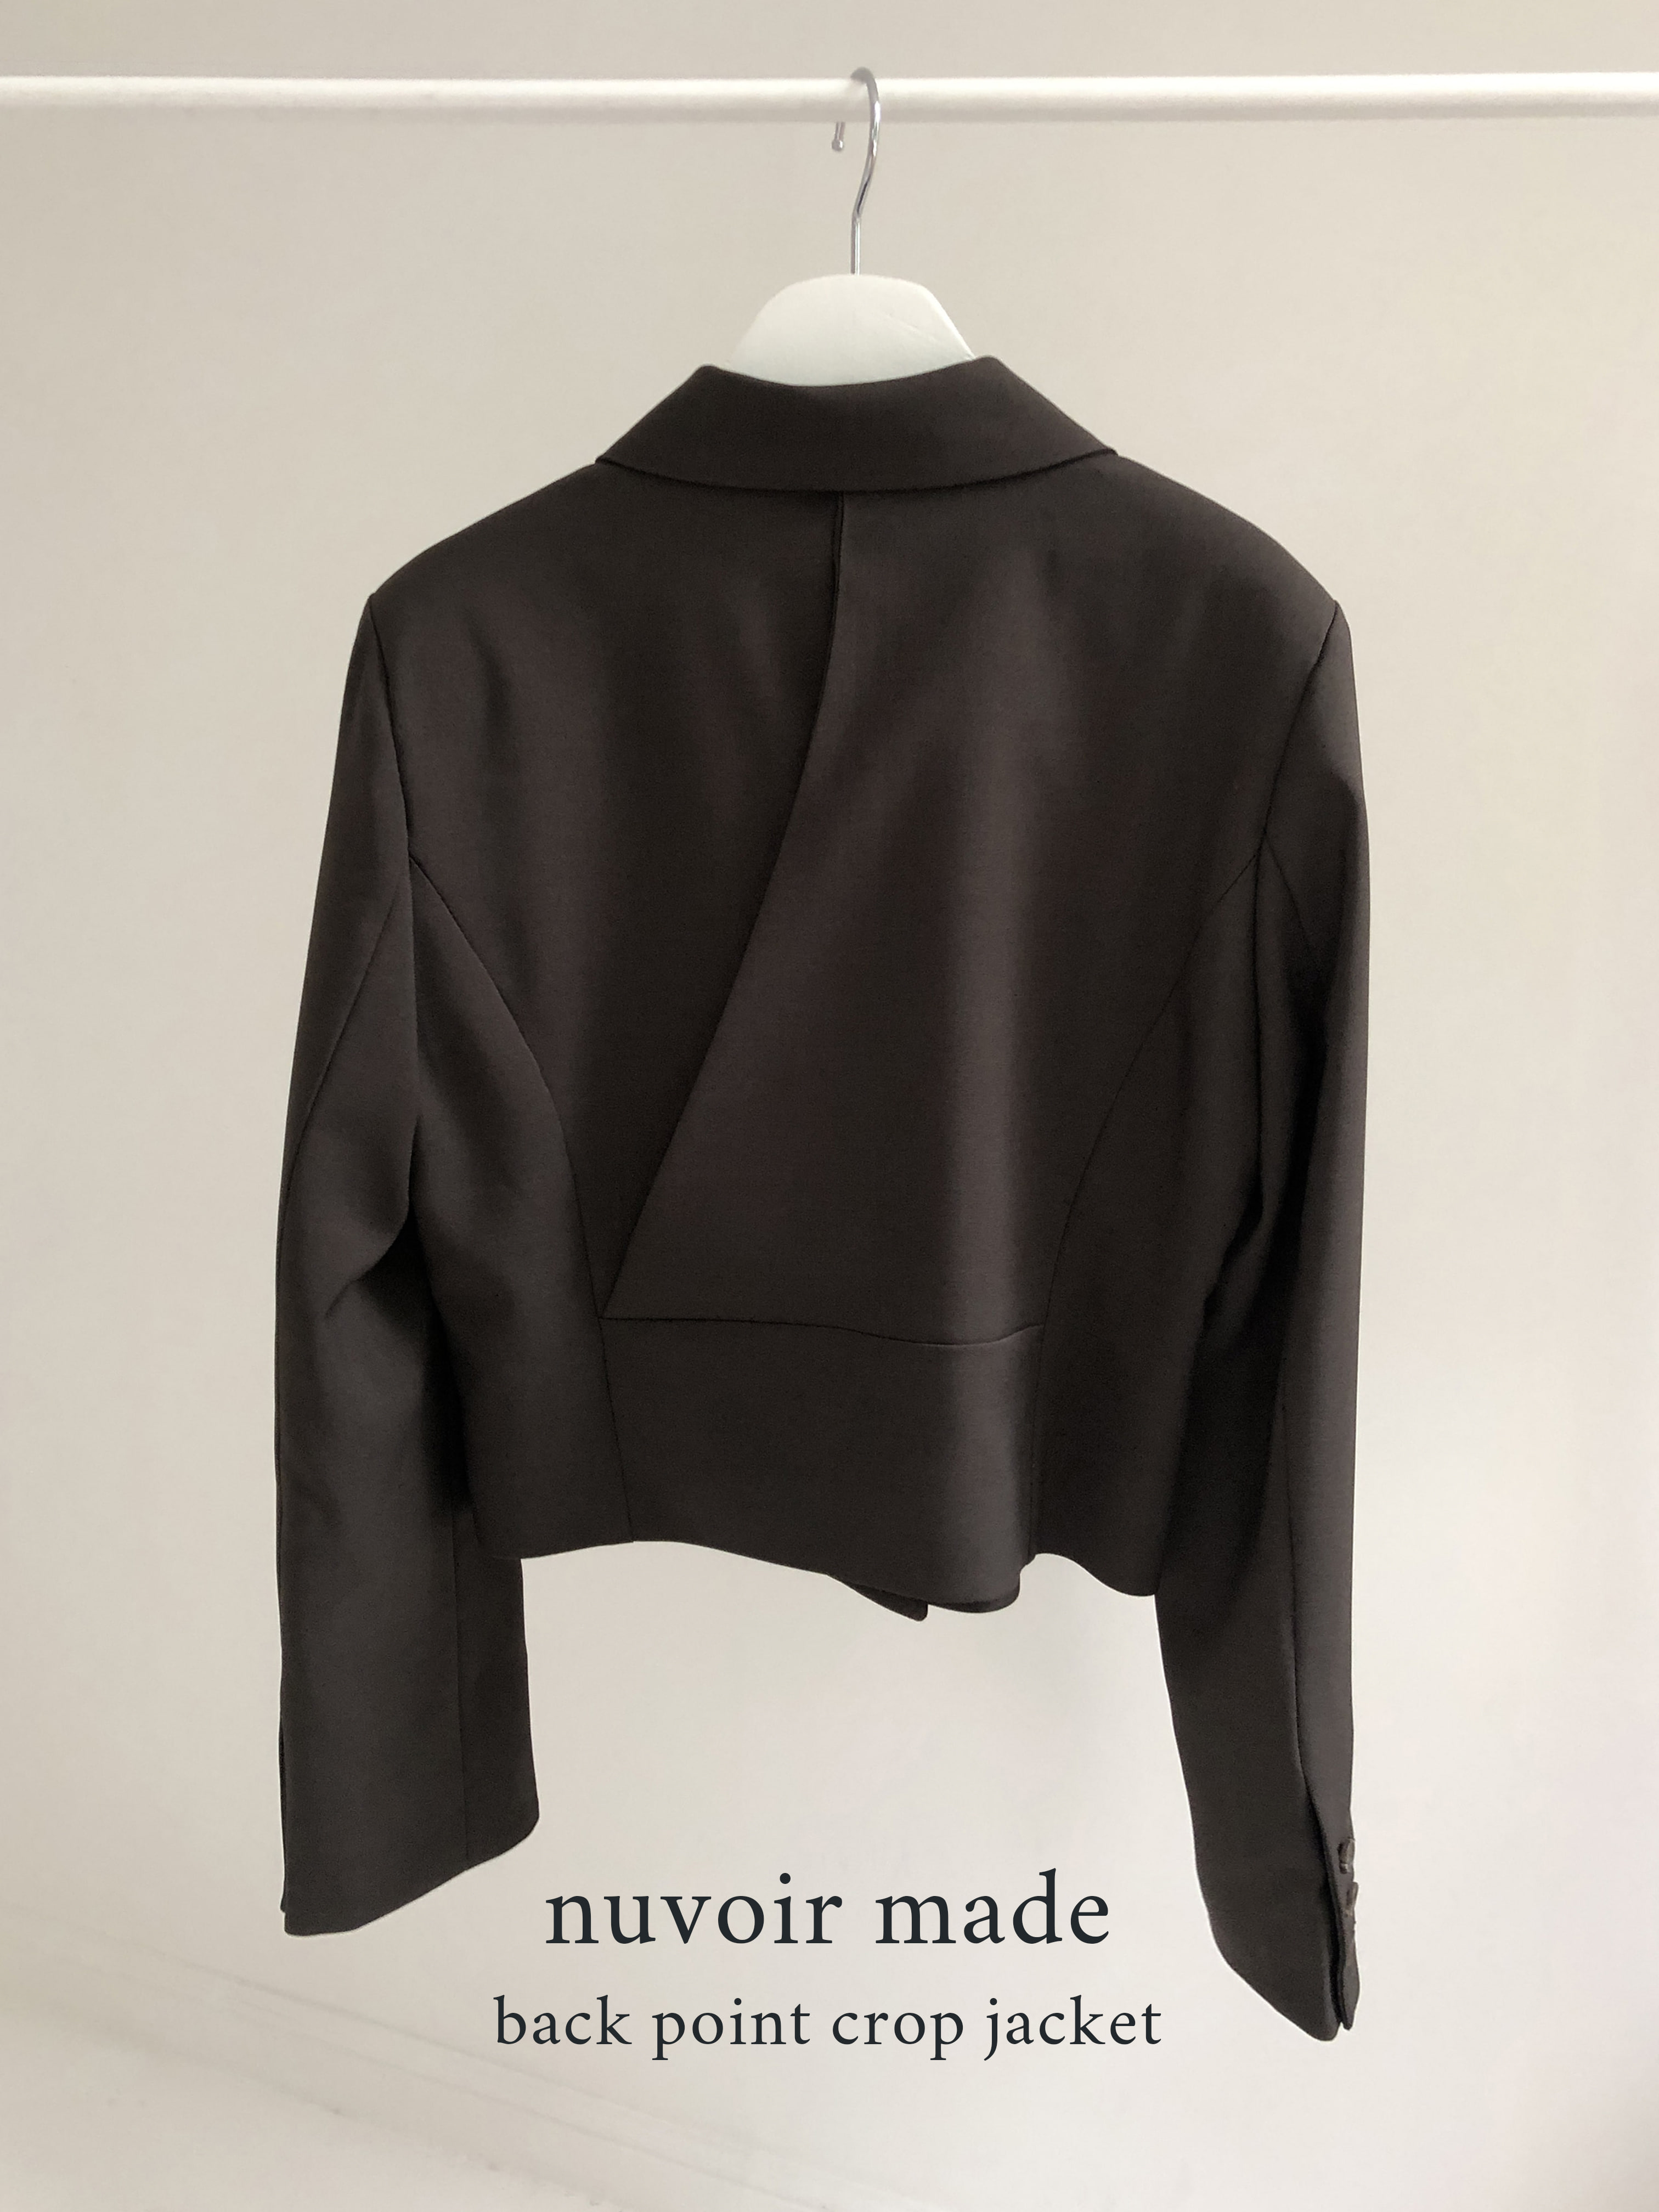 [made] back point crop jacket